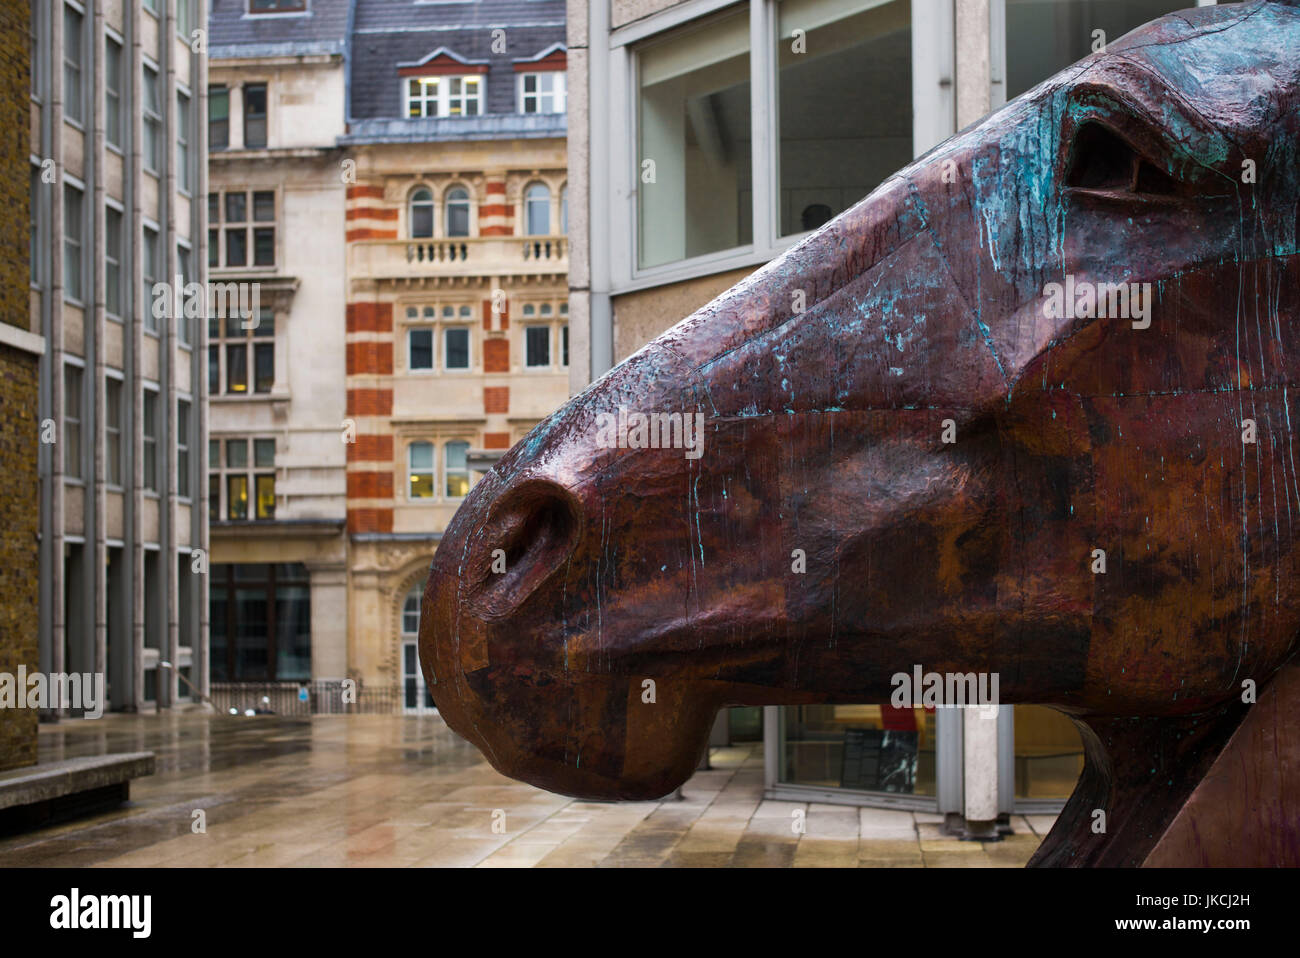 England, London, St. James, Economist Plaza, sculpture of horse head by Nic Fiddian Green Stock Photo